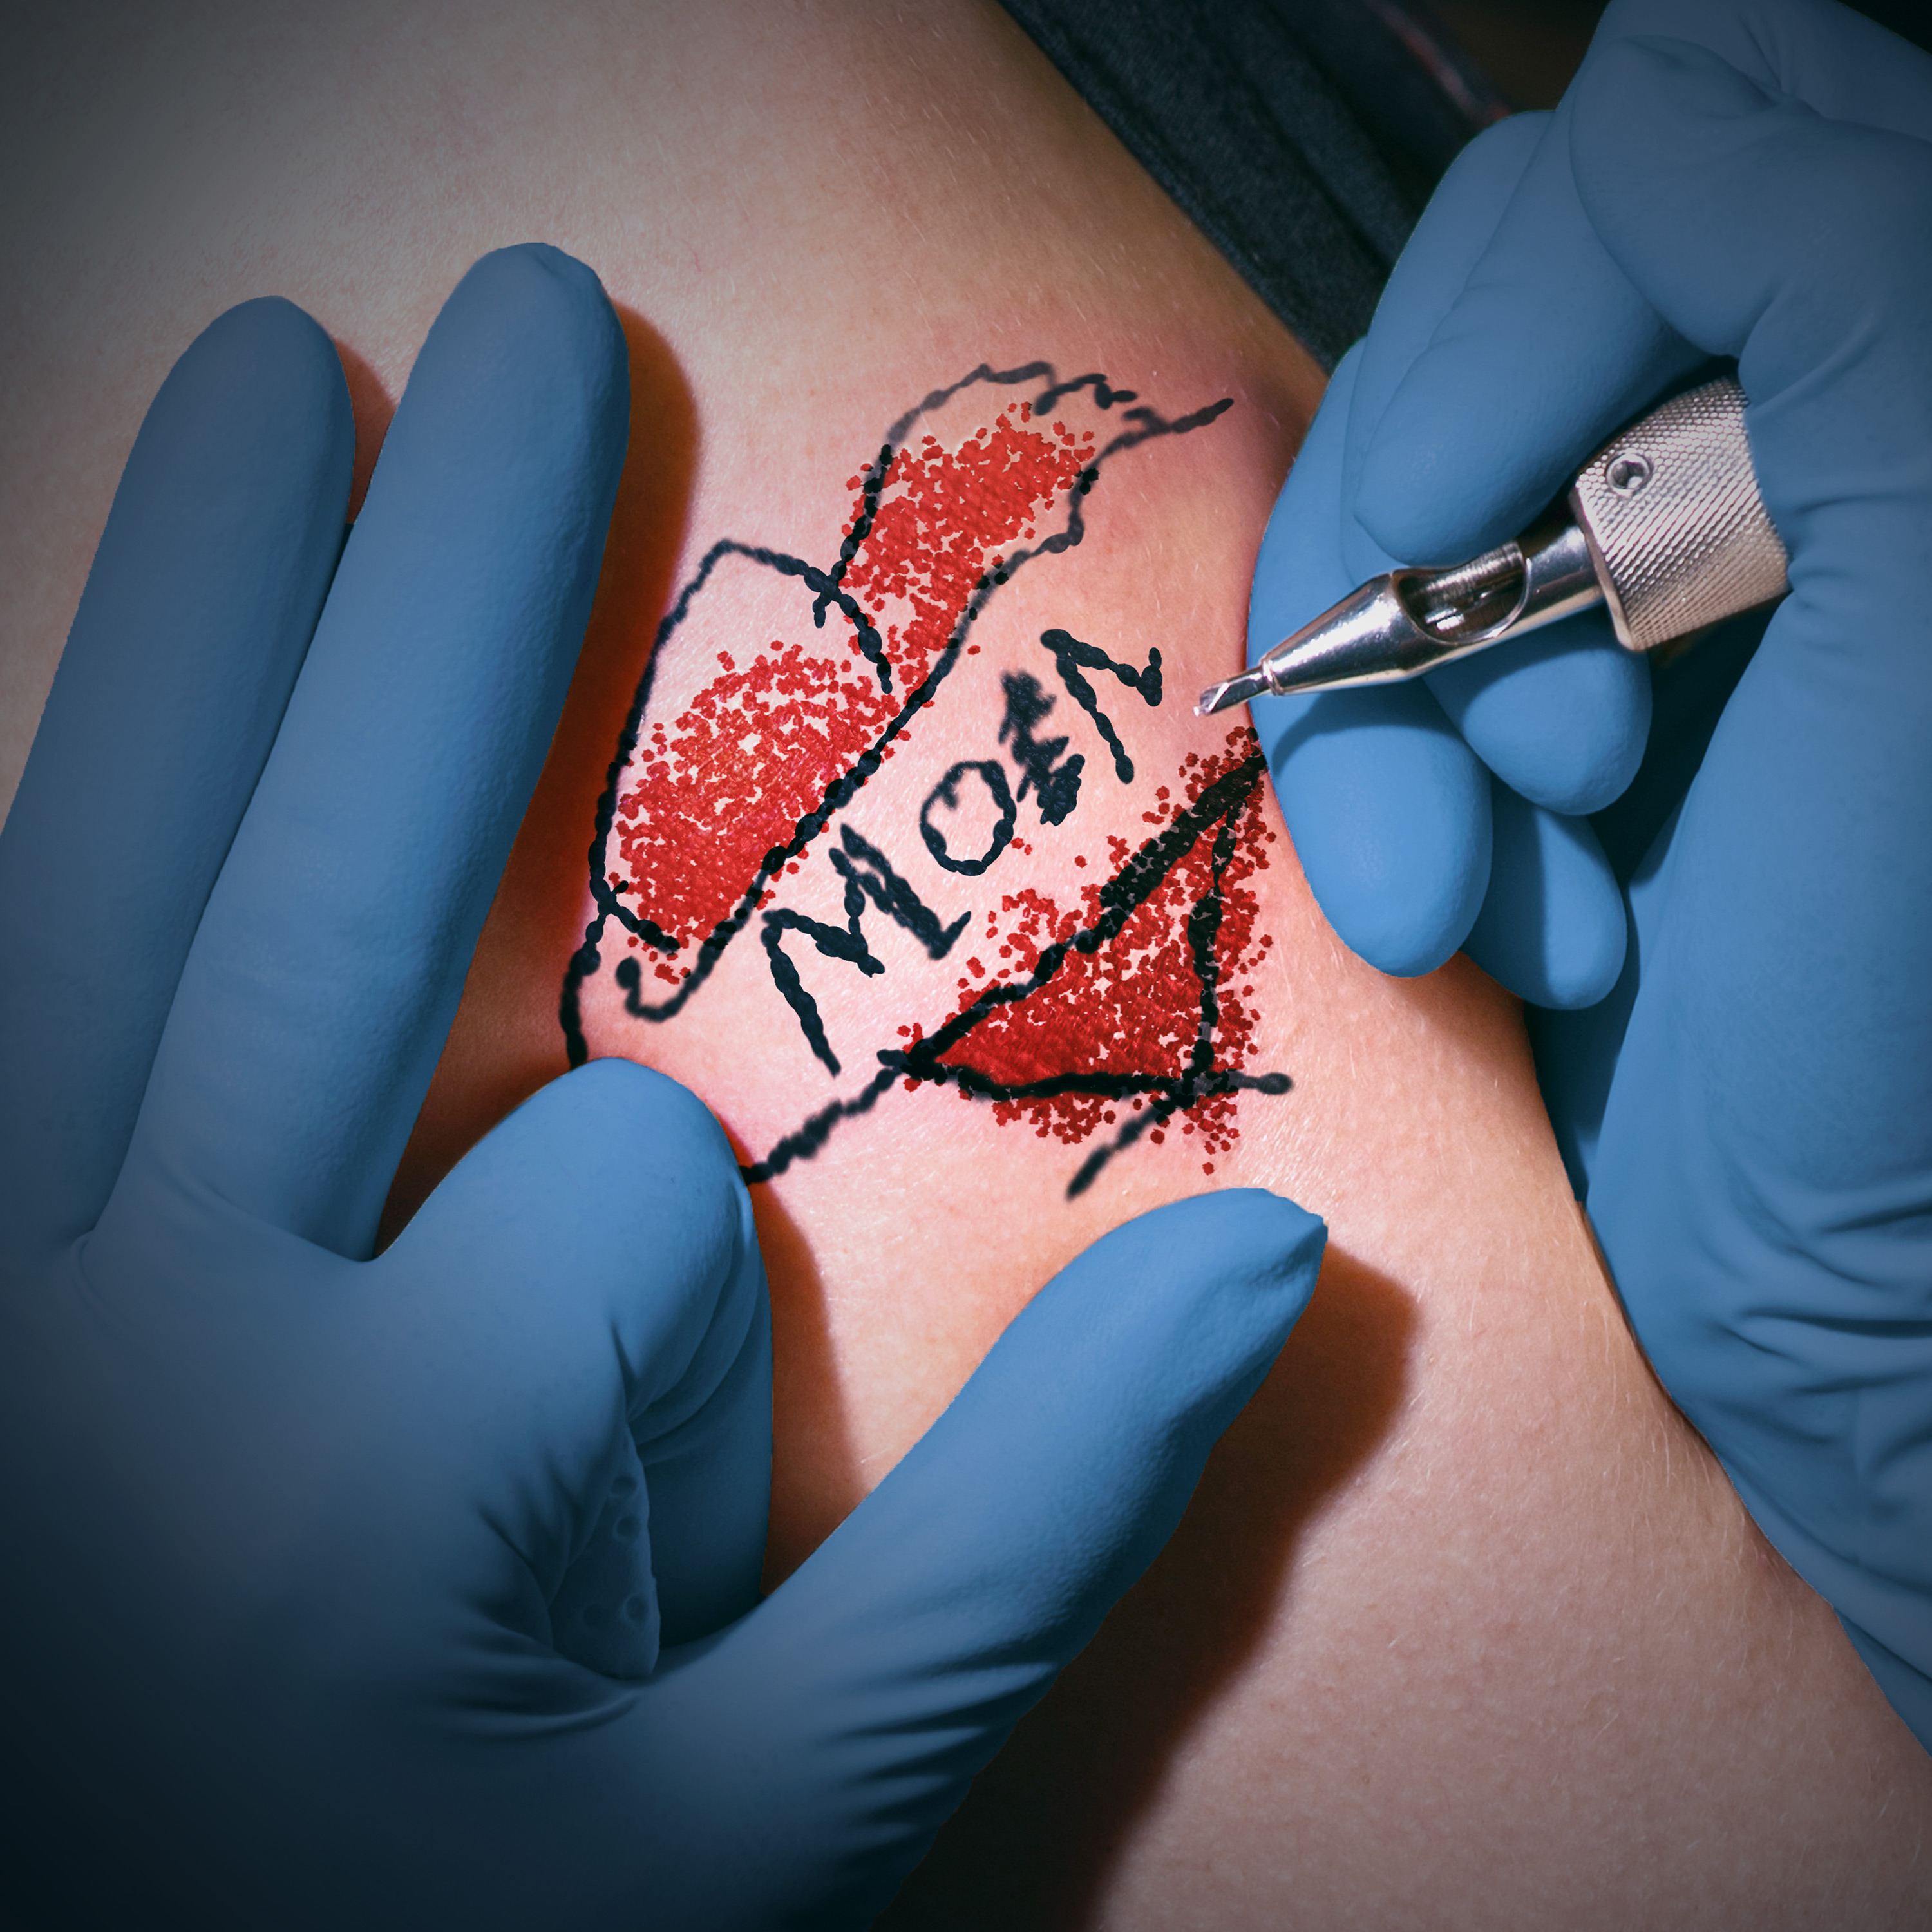 7 Health Risks You Should Keep In Mind Before Getting A Tattoo - Cura4U